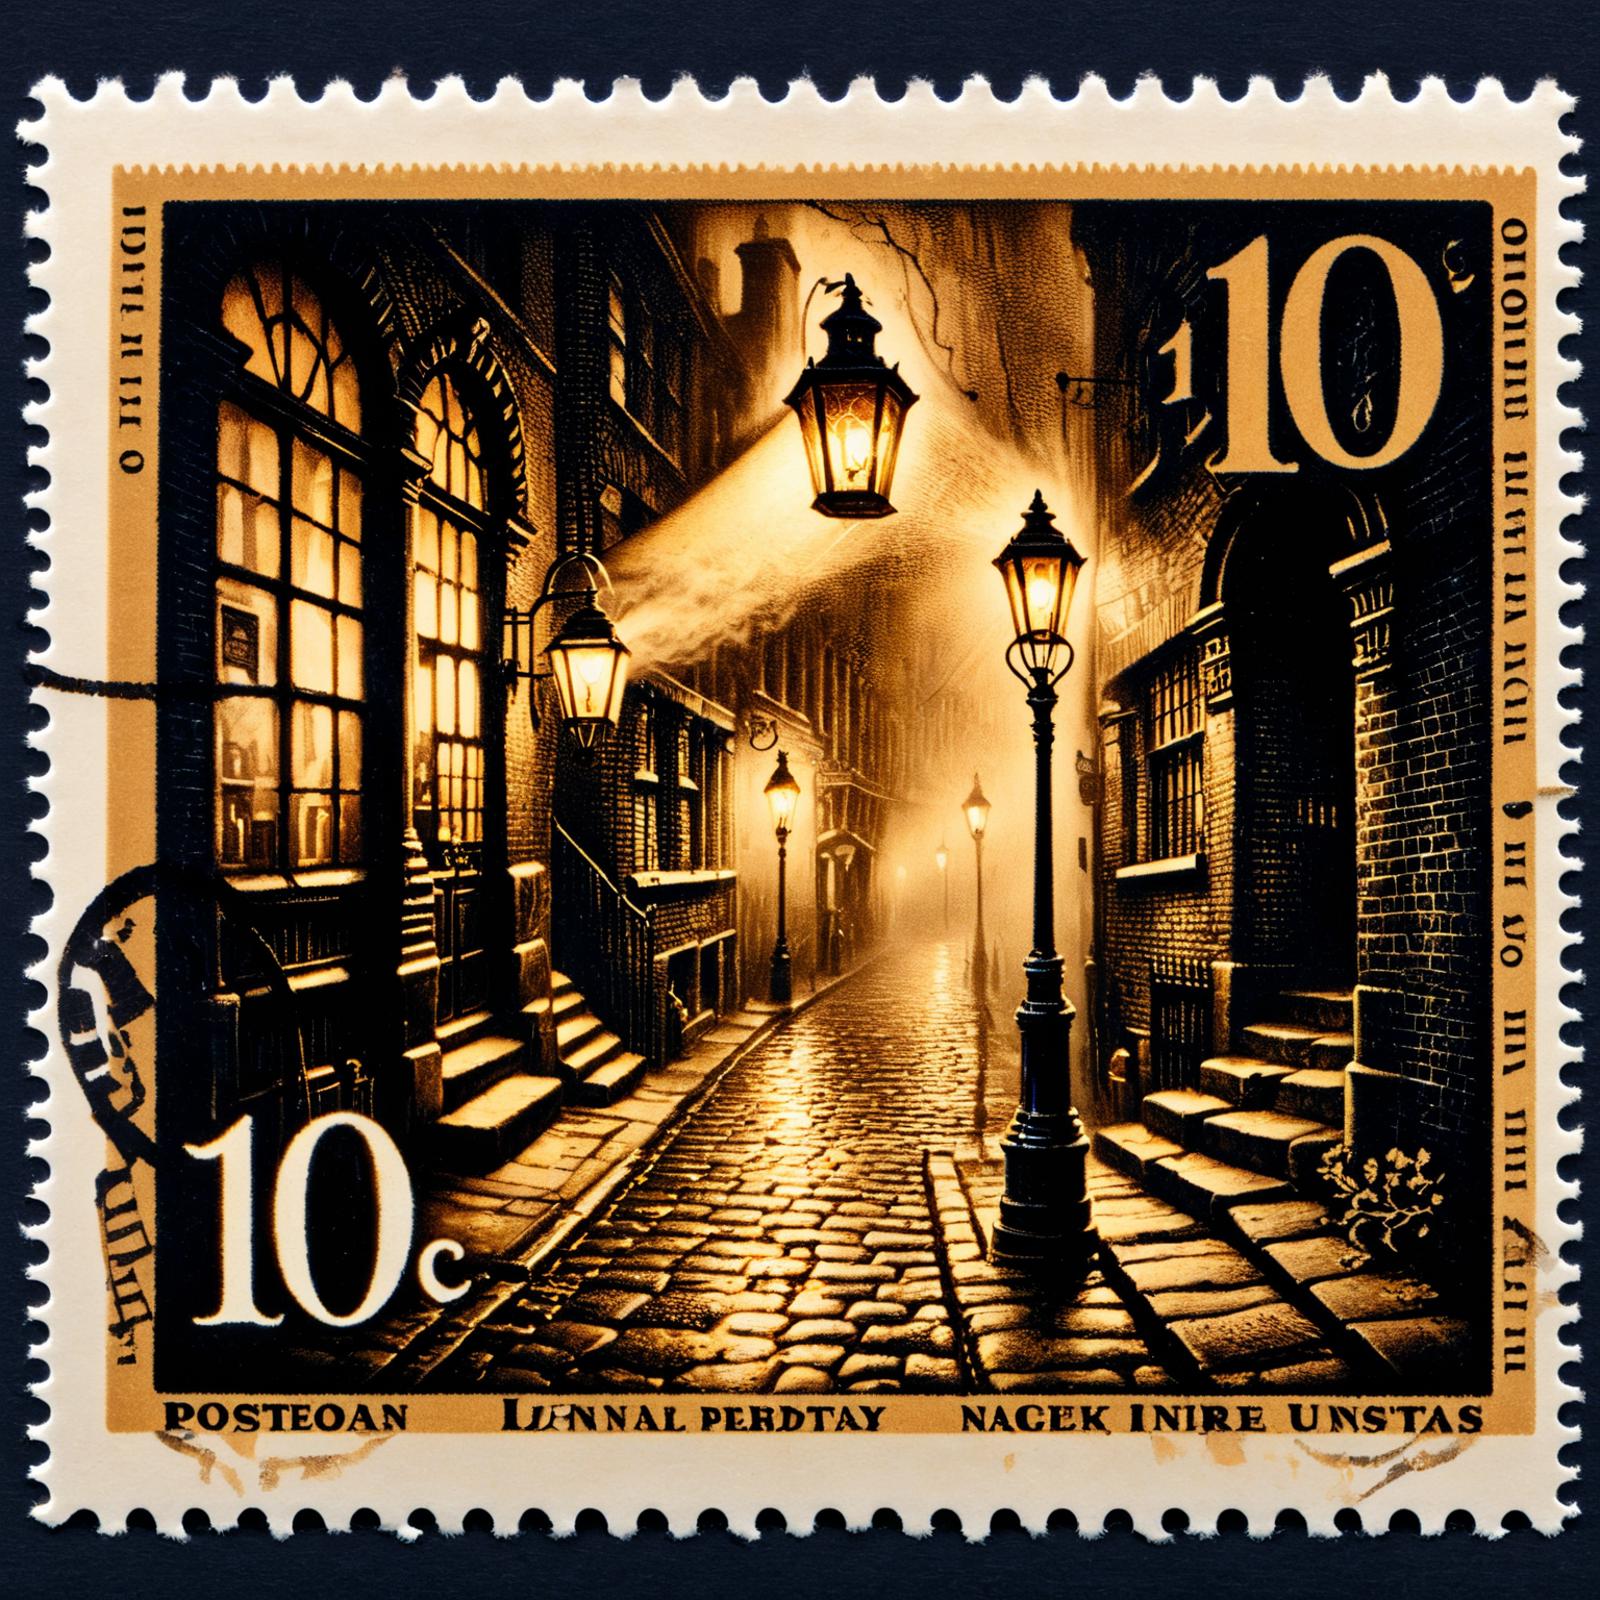 Dark Fantasy Postage Stamp image by artificialstupidity